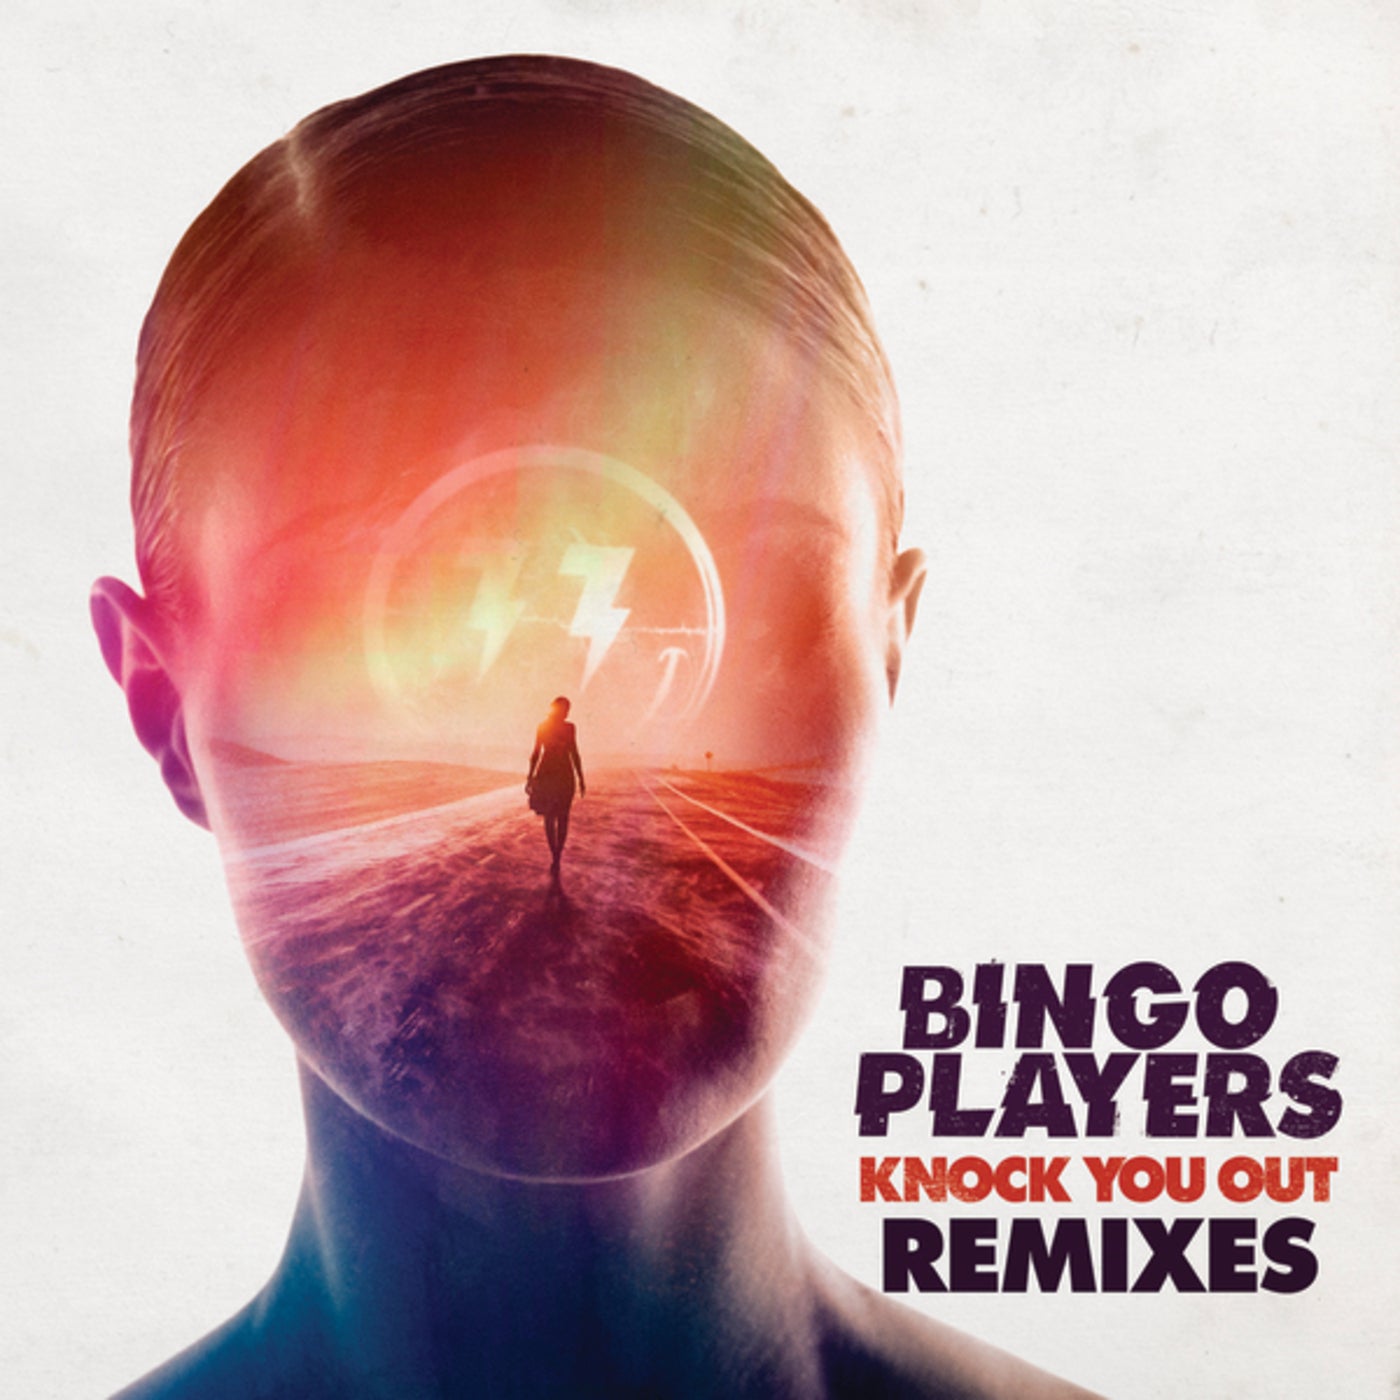 Bingo players. Bingo Players – Knock you out (Hardwell Remix). Bingo Players фото. Bingo Players Knock you out.